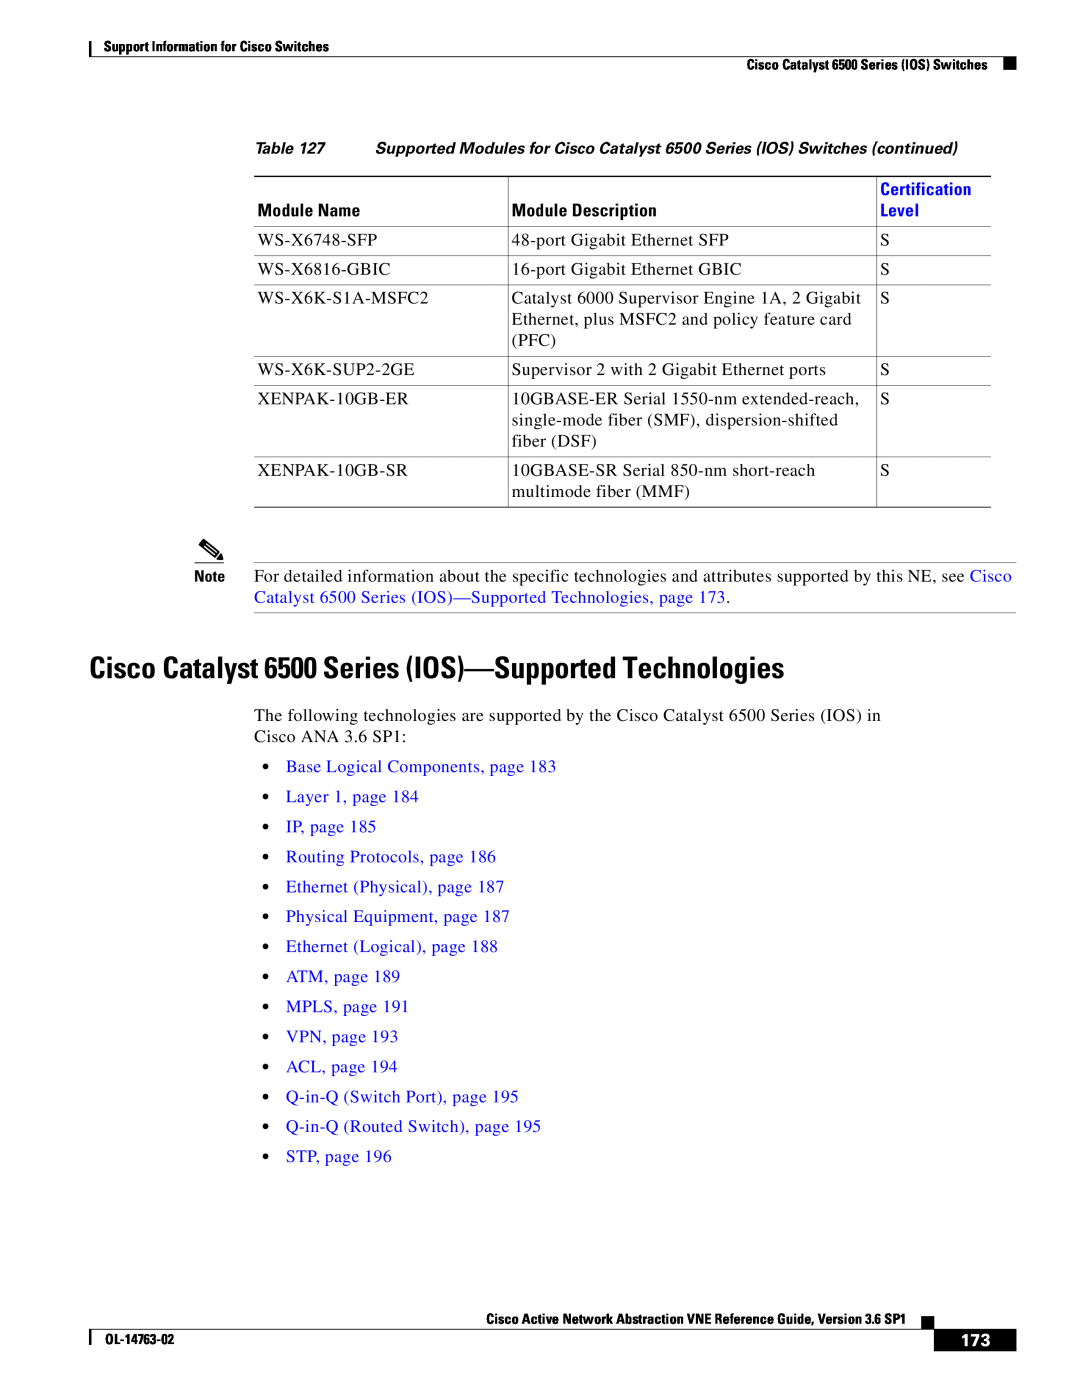 Cisco Systems OL-14763-02 manual Cisco Catalyst 6500 Series IOS-Supported Technologies, Module Name, Module Description 